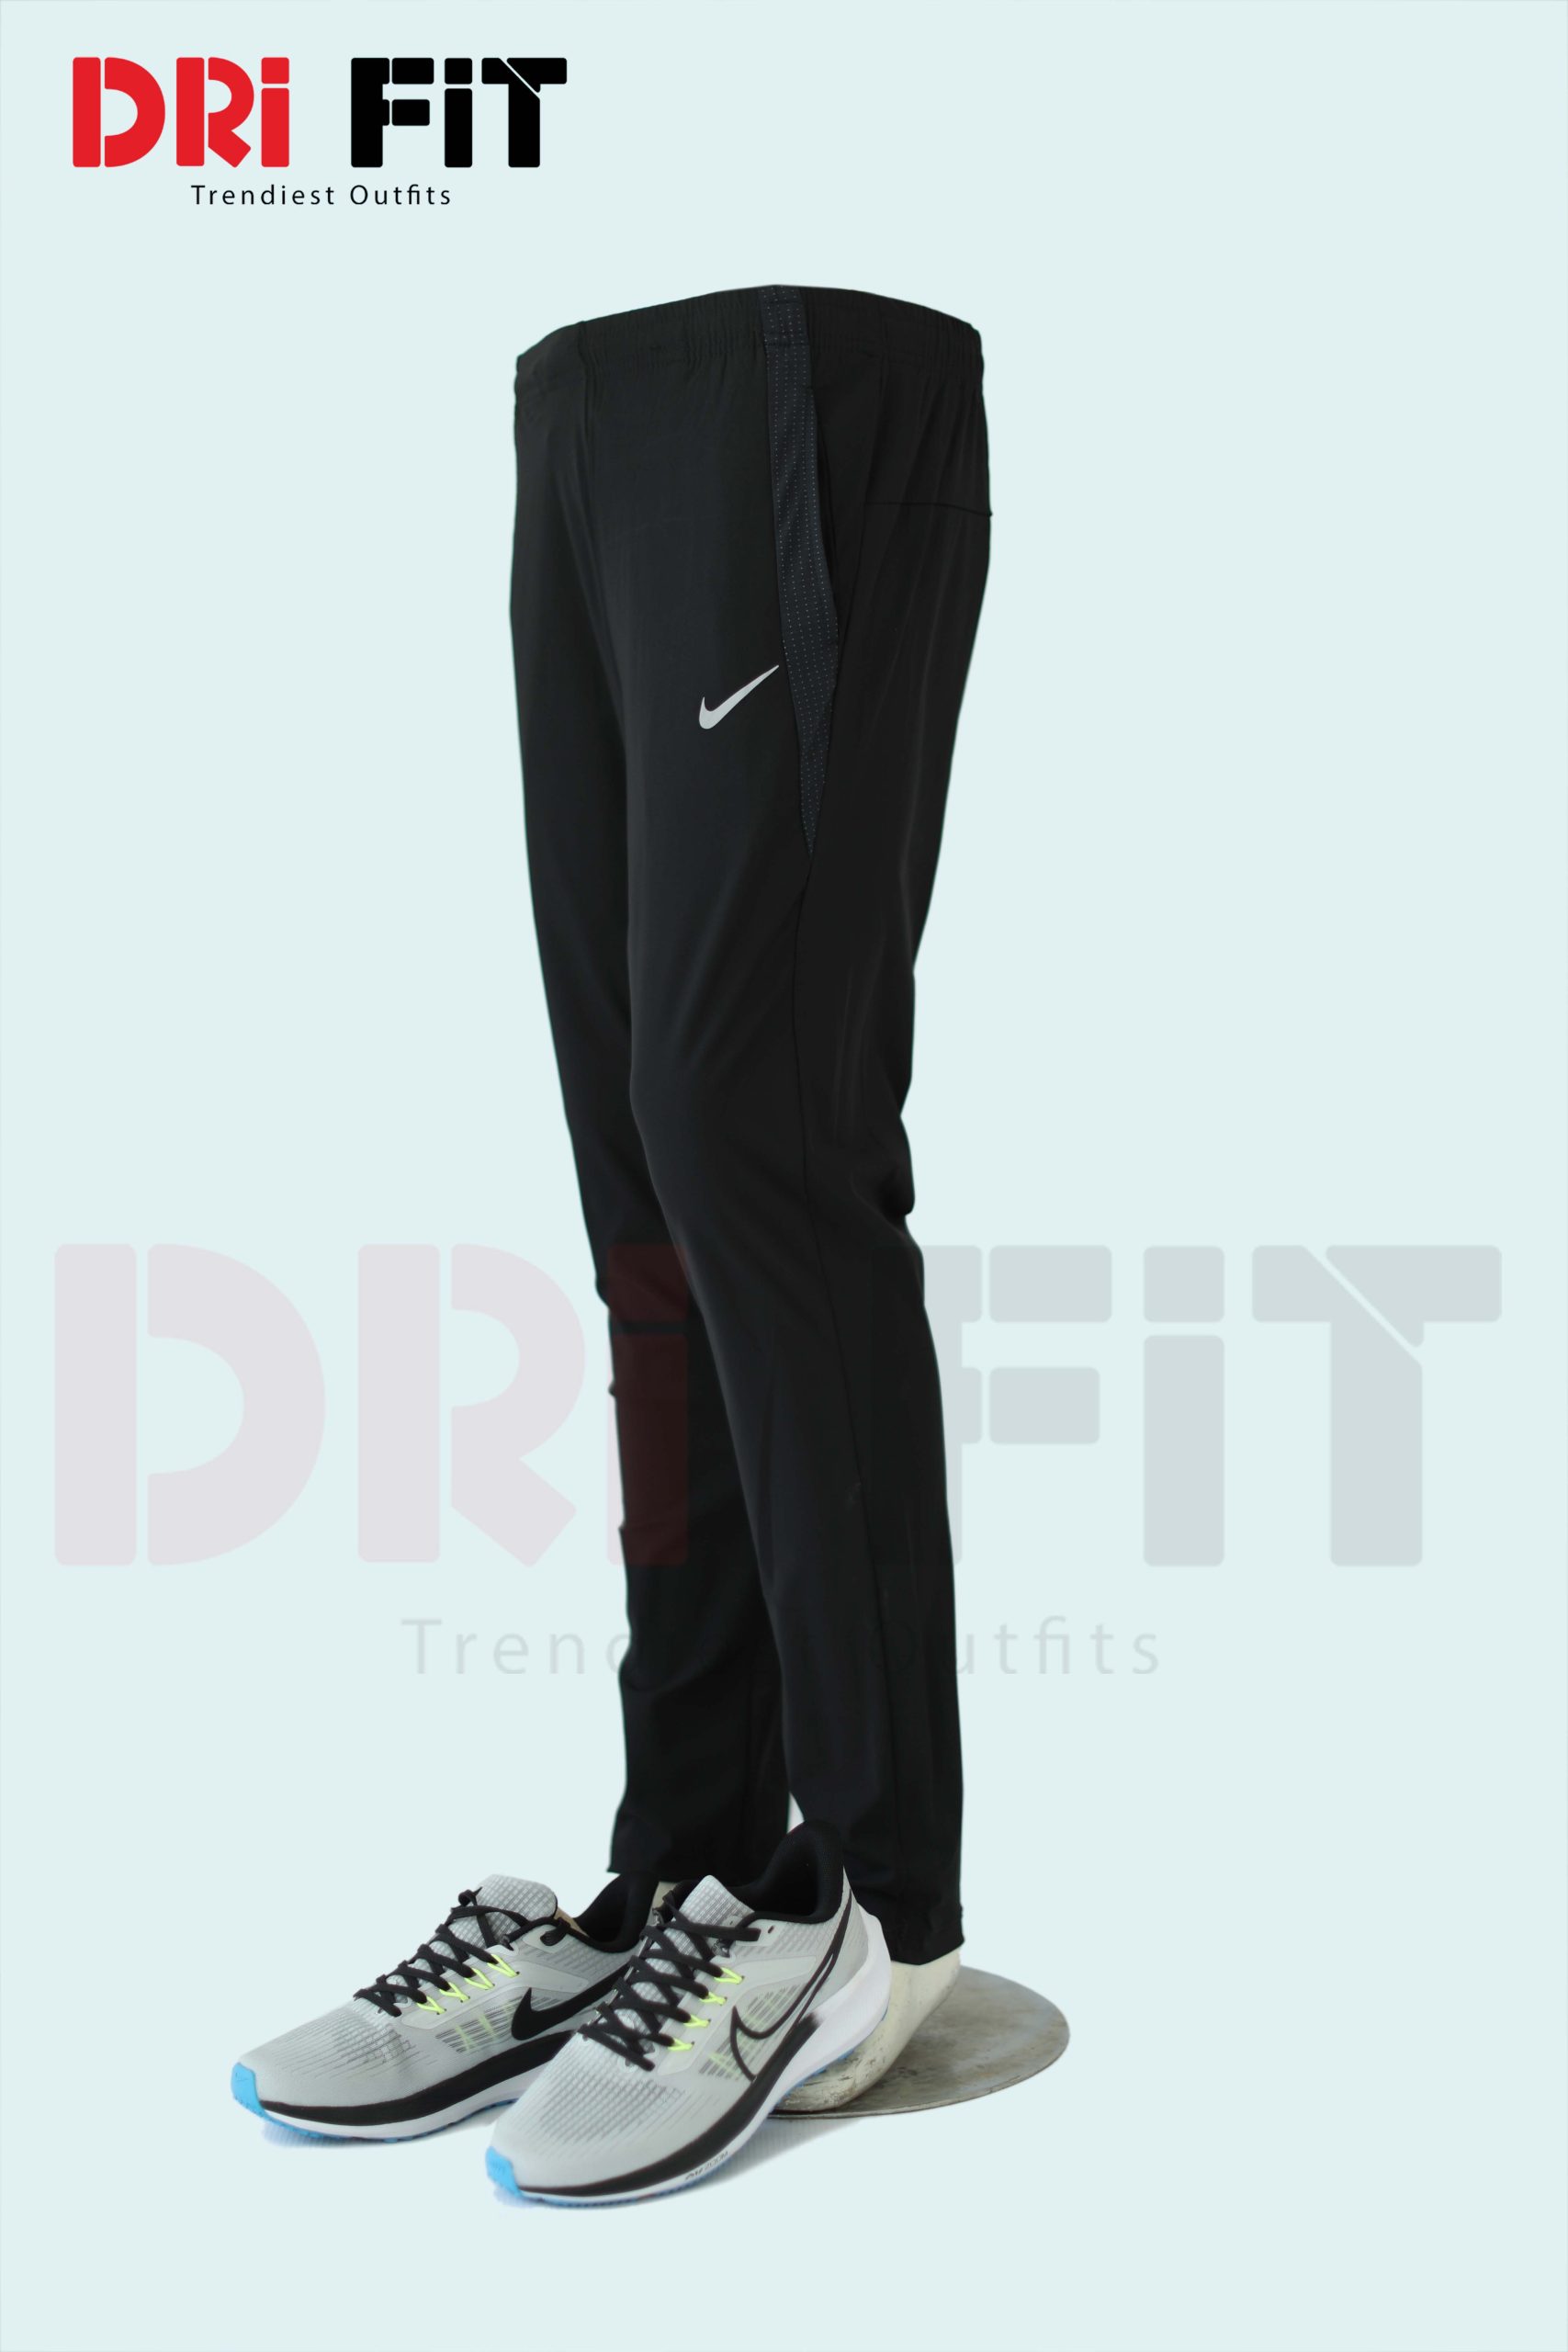 Nike BLISS MR VCTRY PANT Clothing Sports Training